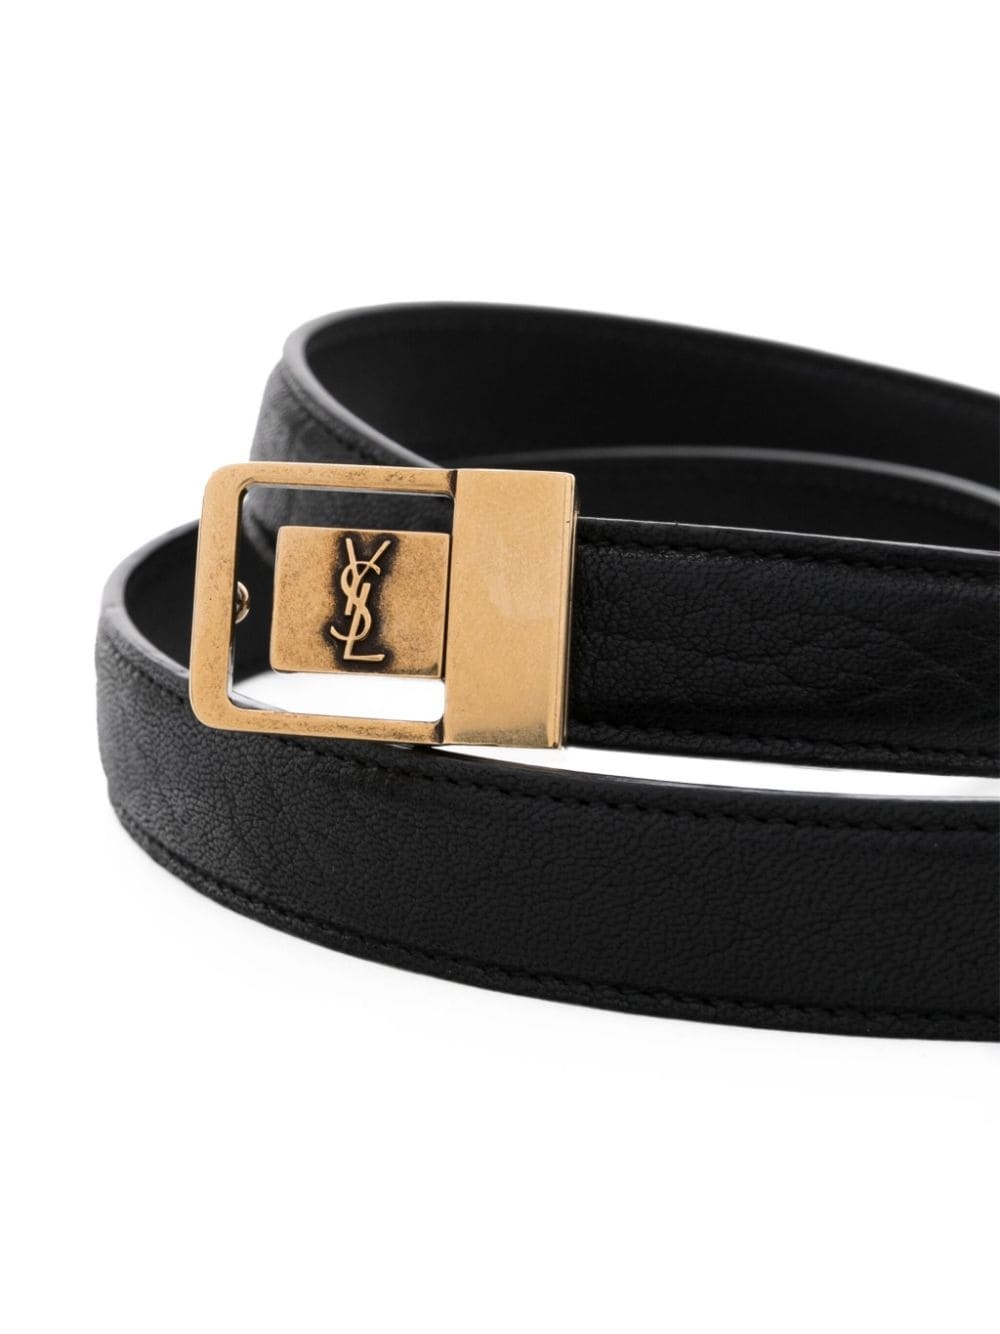 La 66 leather belt - 2